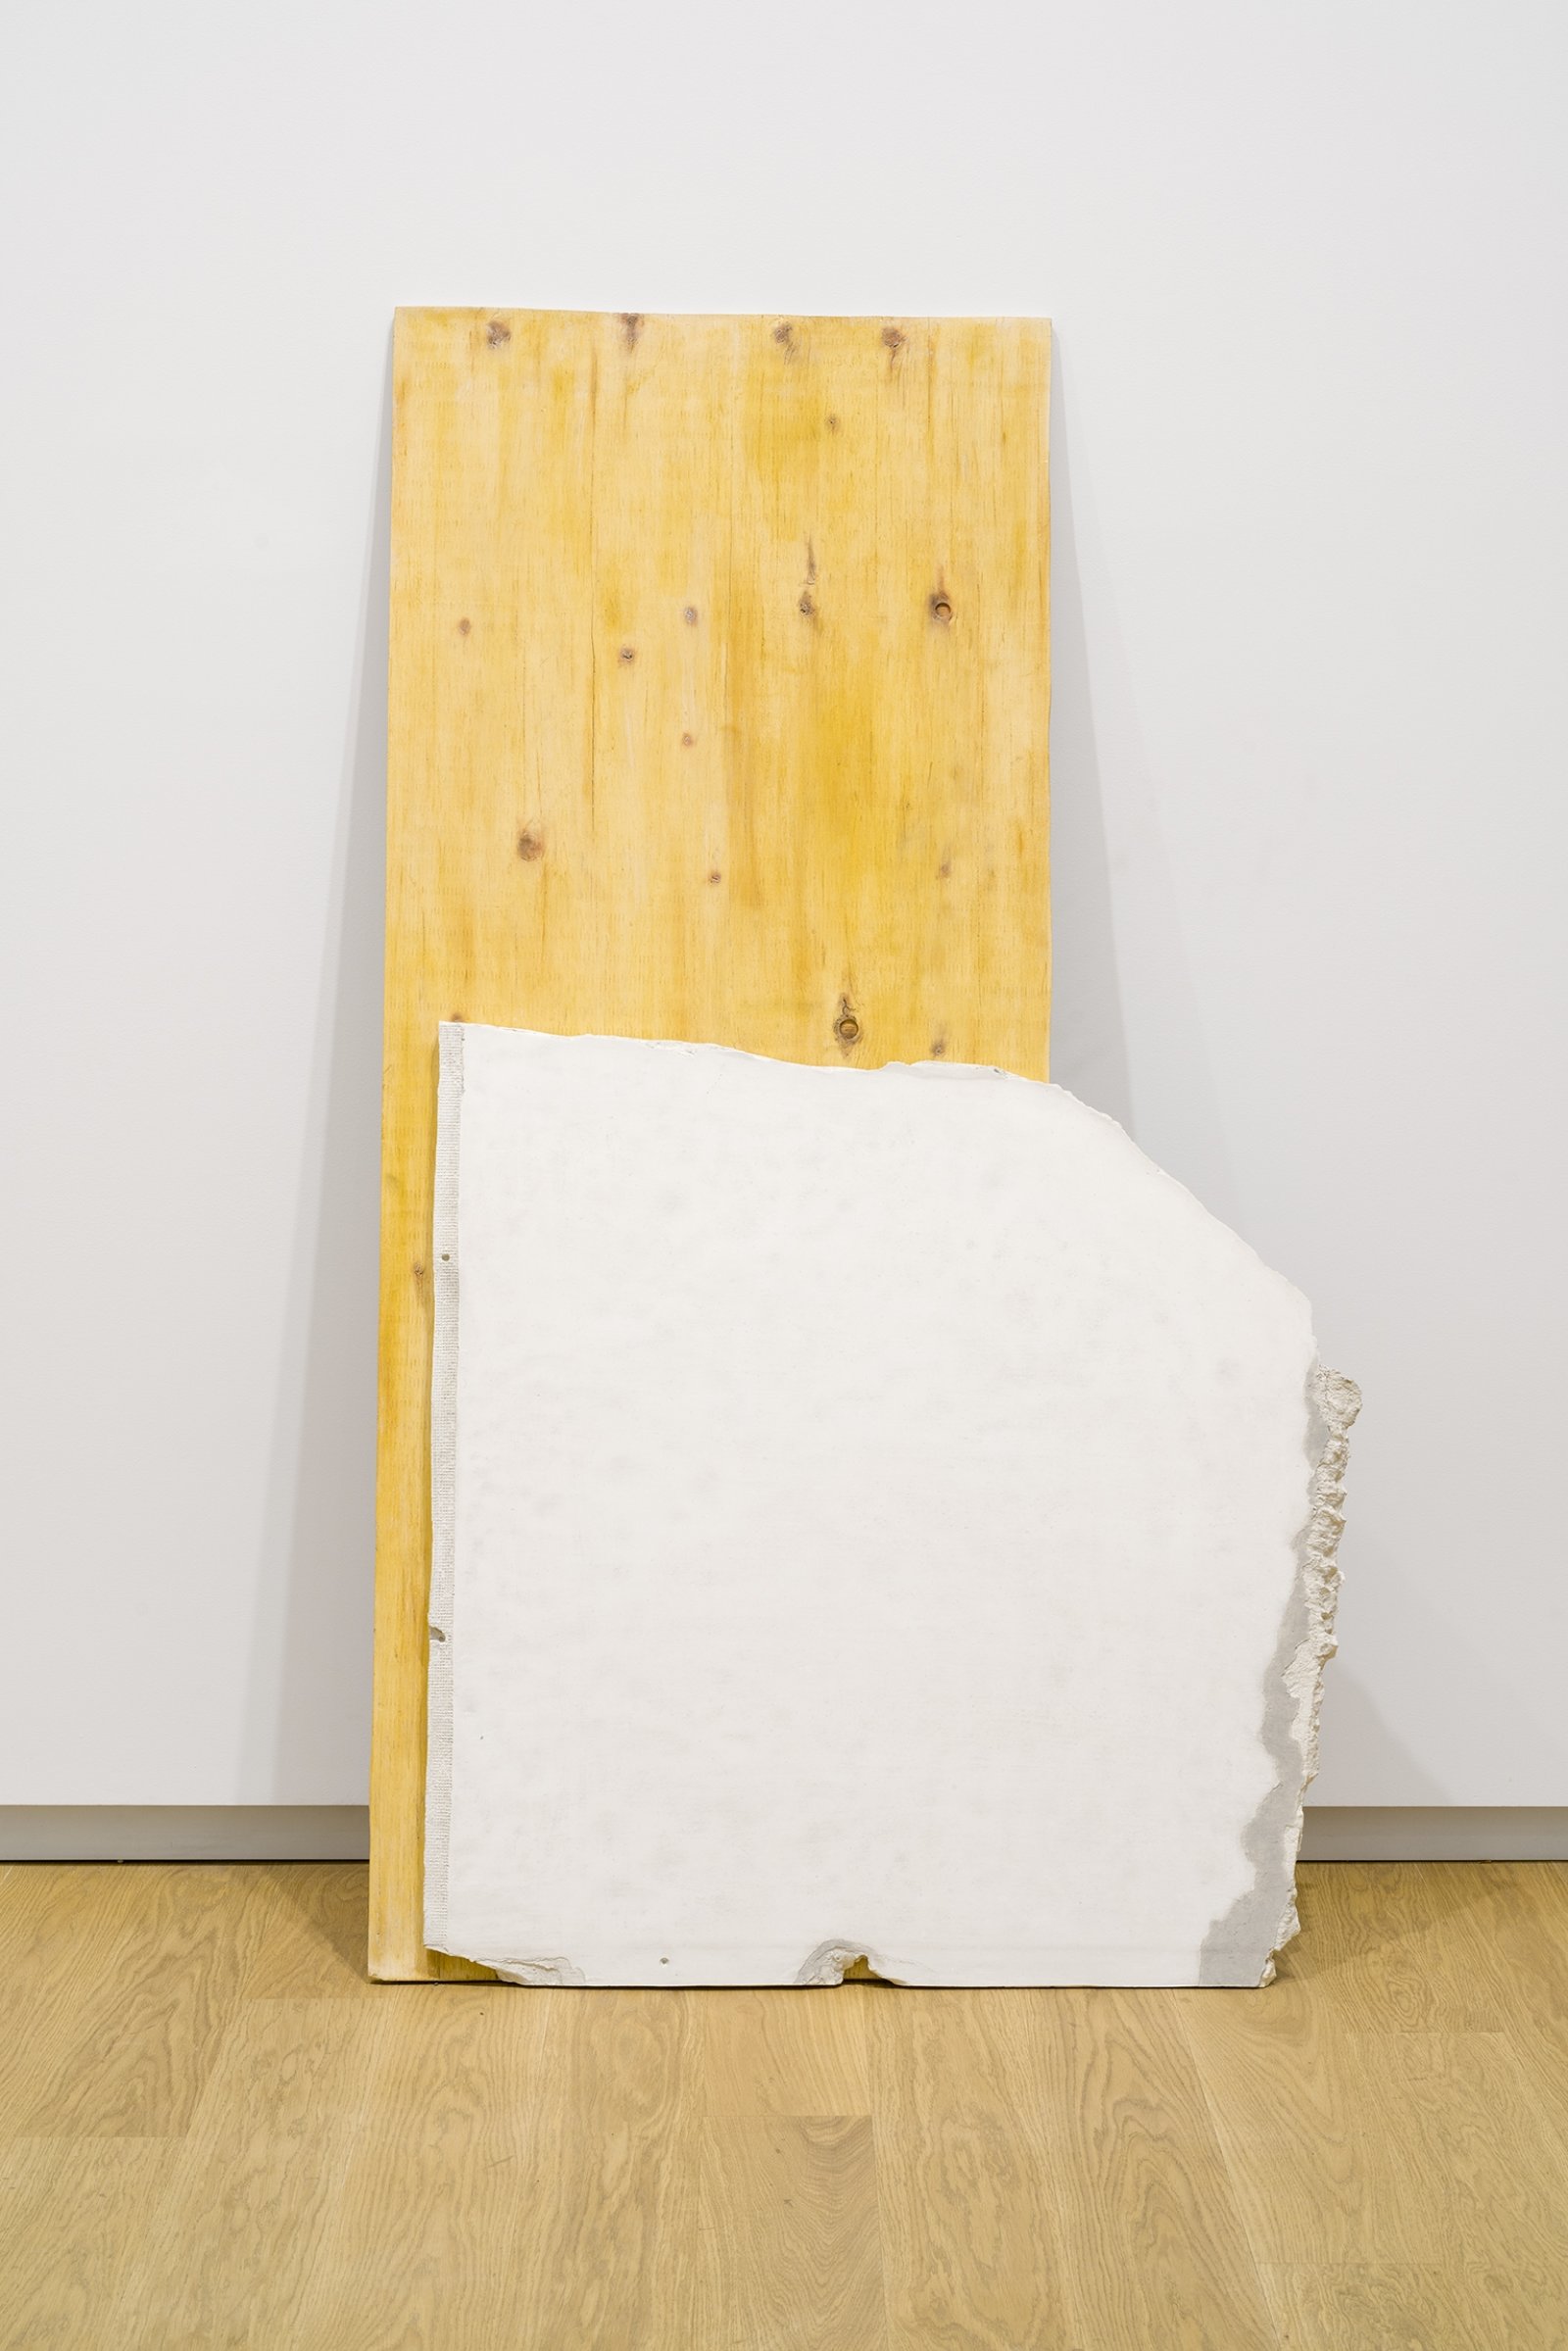 Liz Magor, Stores, 2000, plaster, resin, food, 61 x 32 x 14 in. (155 x 81 x 36 cm). Installation view, LoSt + FoUnD, Remai Modern, Saskatoon, 2018